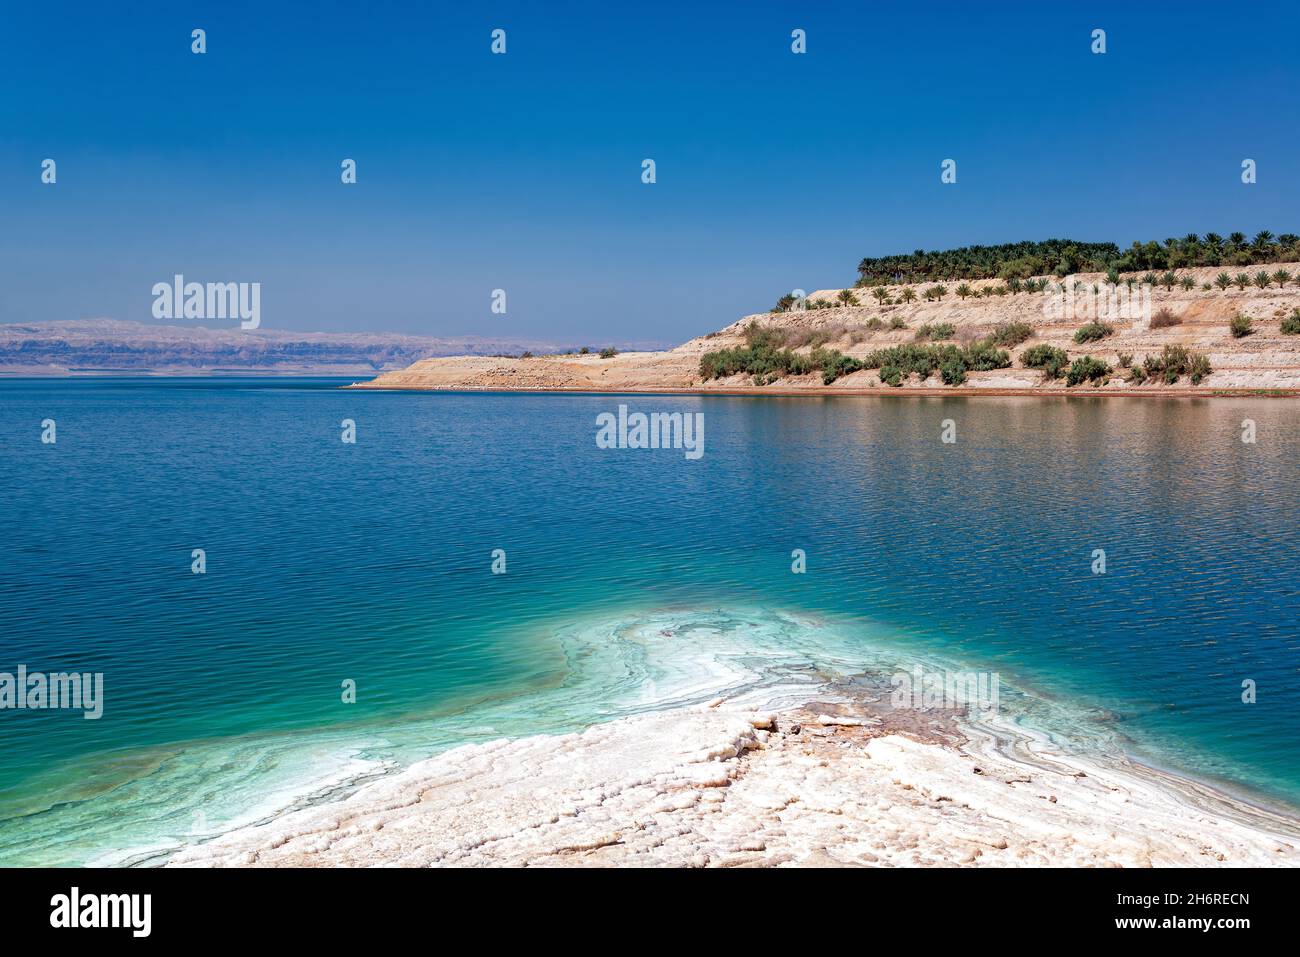 Shoreline of the Dead Sea in Jordan Stock Photo